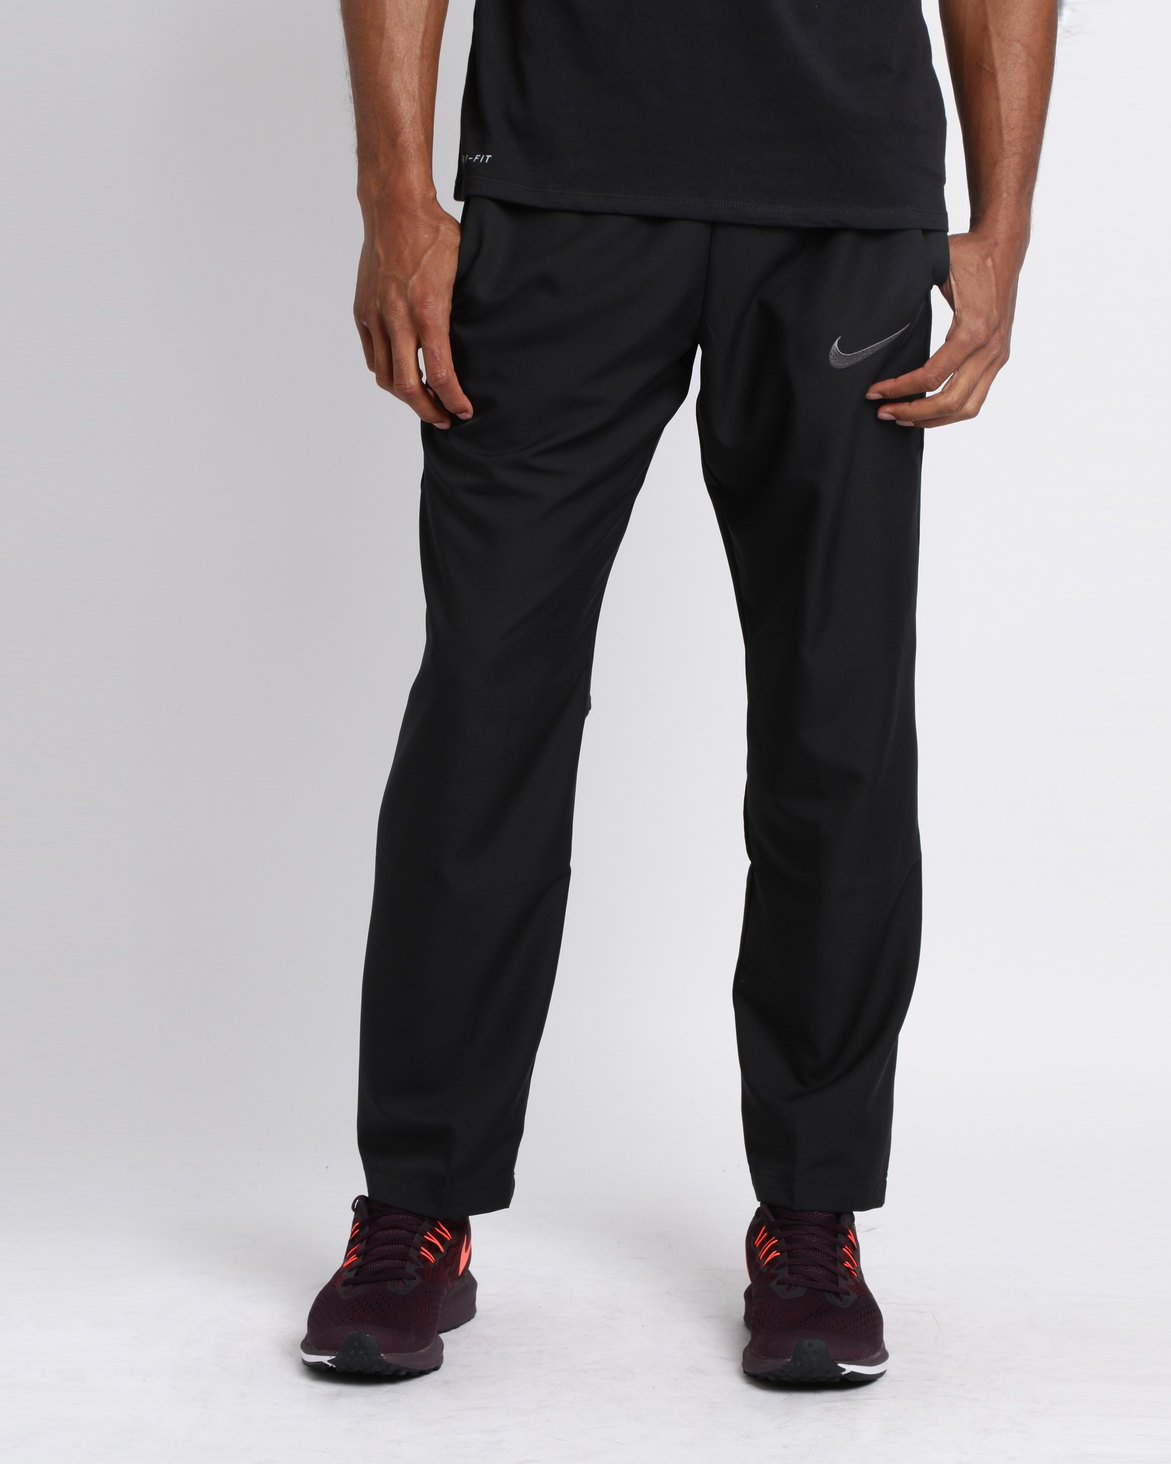 Nike Performance Mens Nike Dry Pant Team Woven Black/Dark Grey | Zando